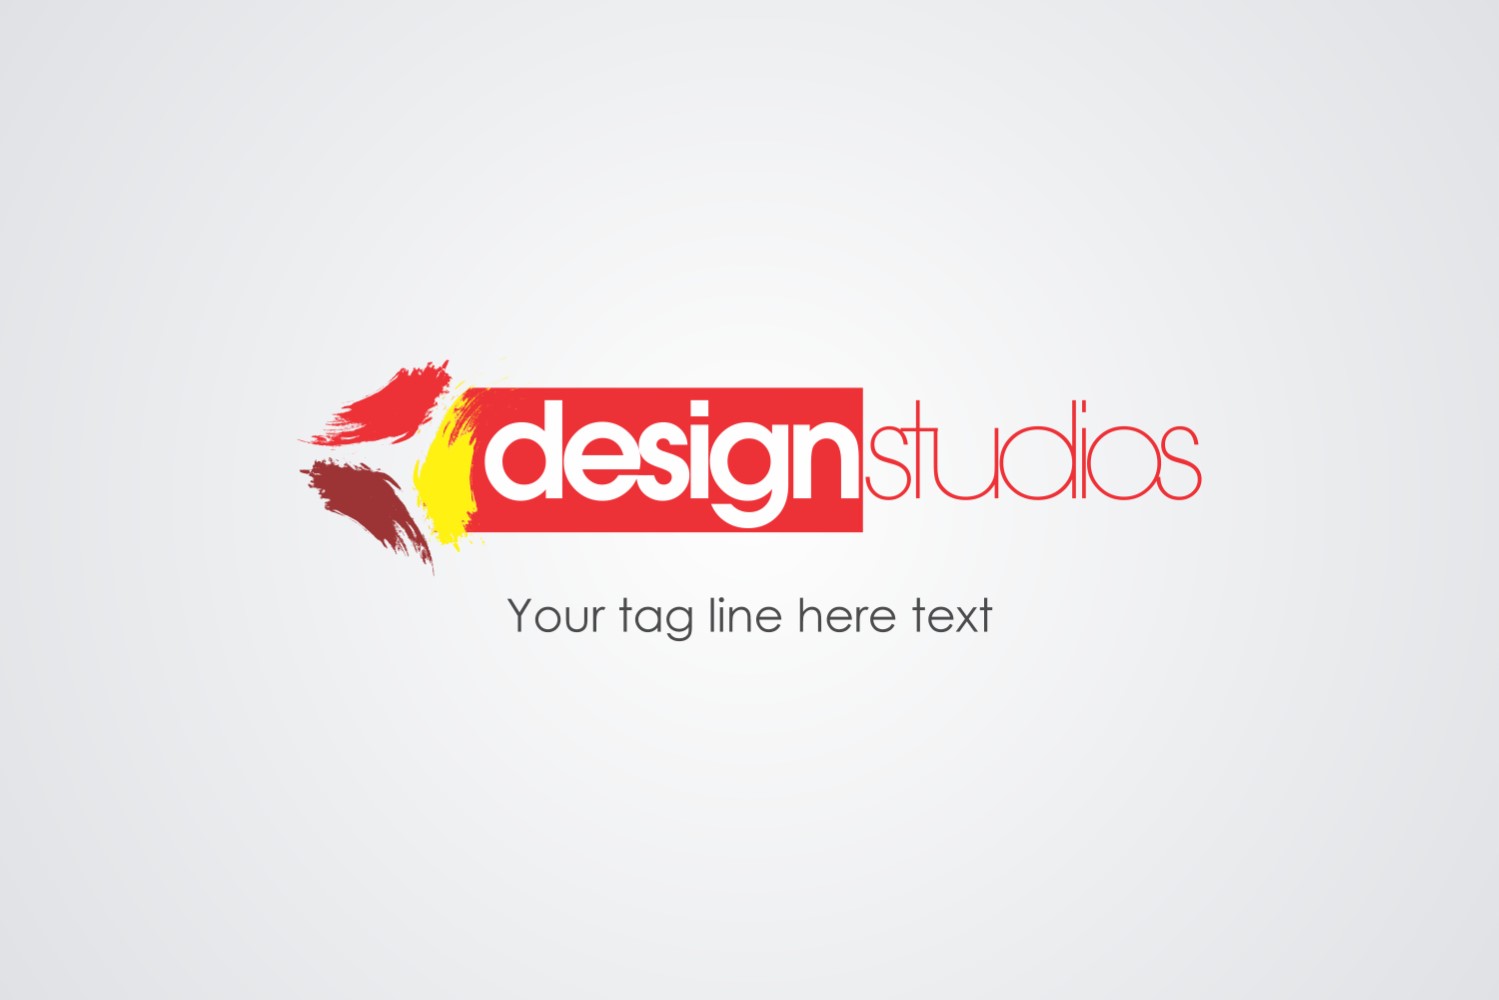 Design Studios Logo Design Template